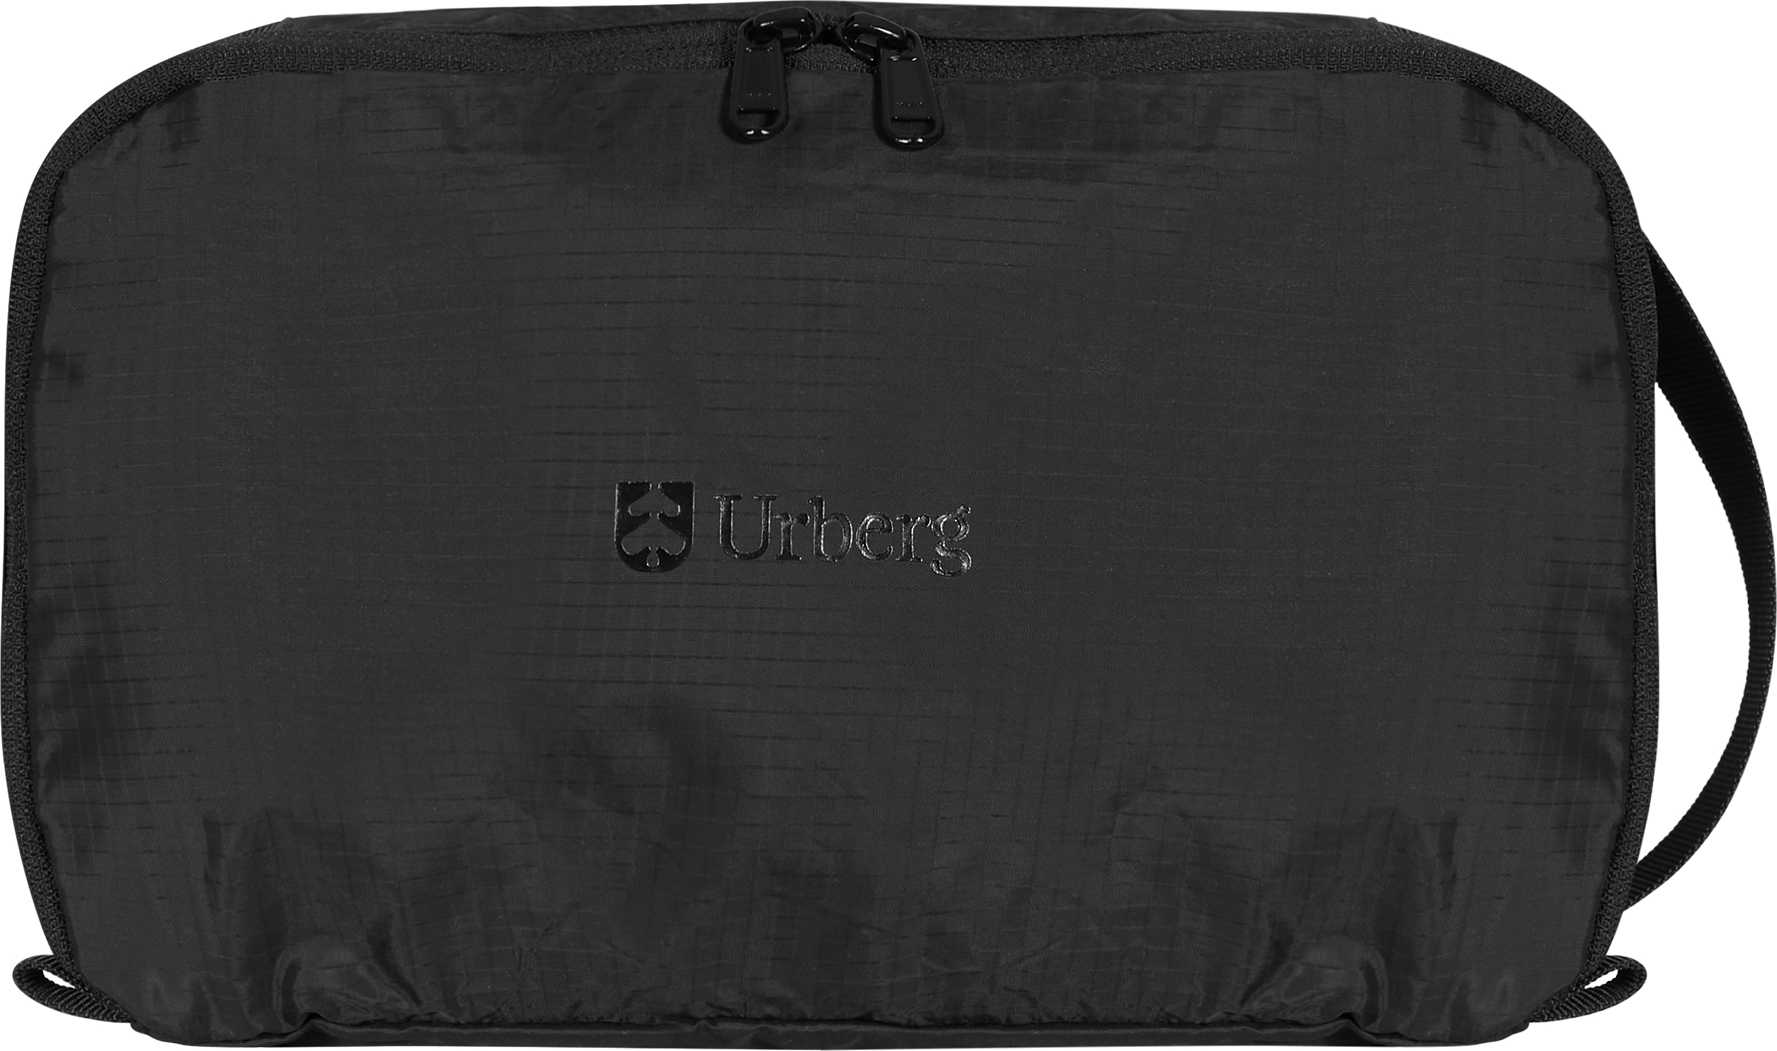 Urberg Packing Cube Medium Black